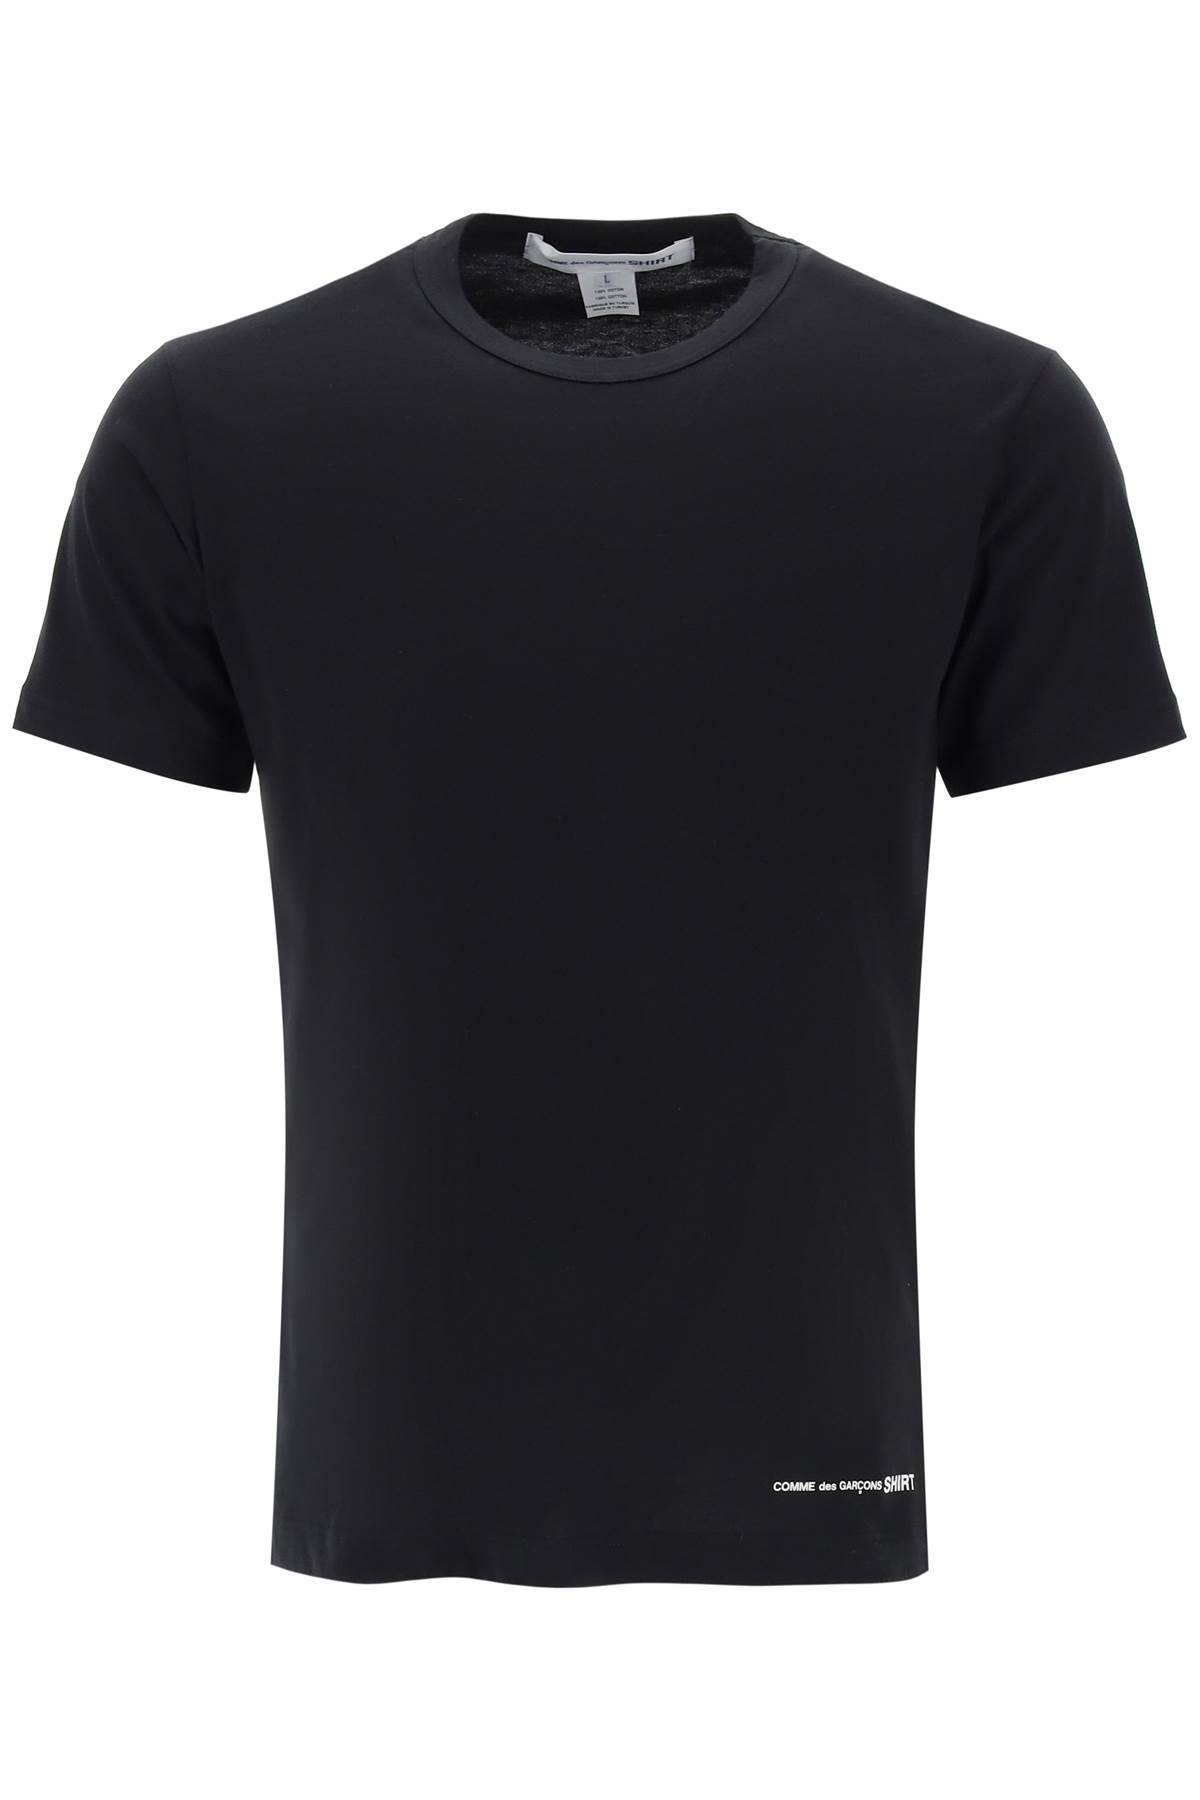 Comme Des Garçons Shirt COMME DES GARCONS SHIRT logo print t-shirt